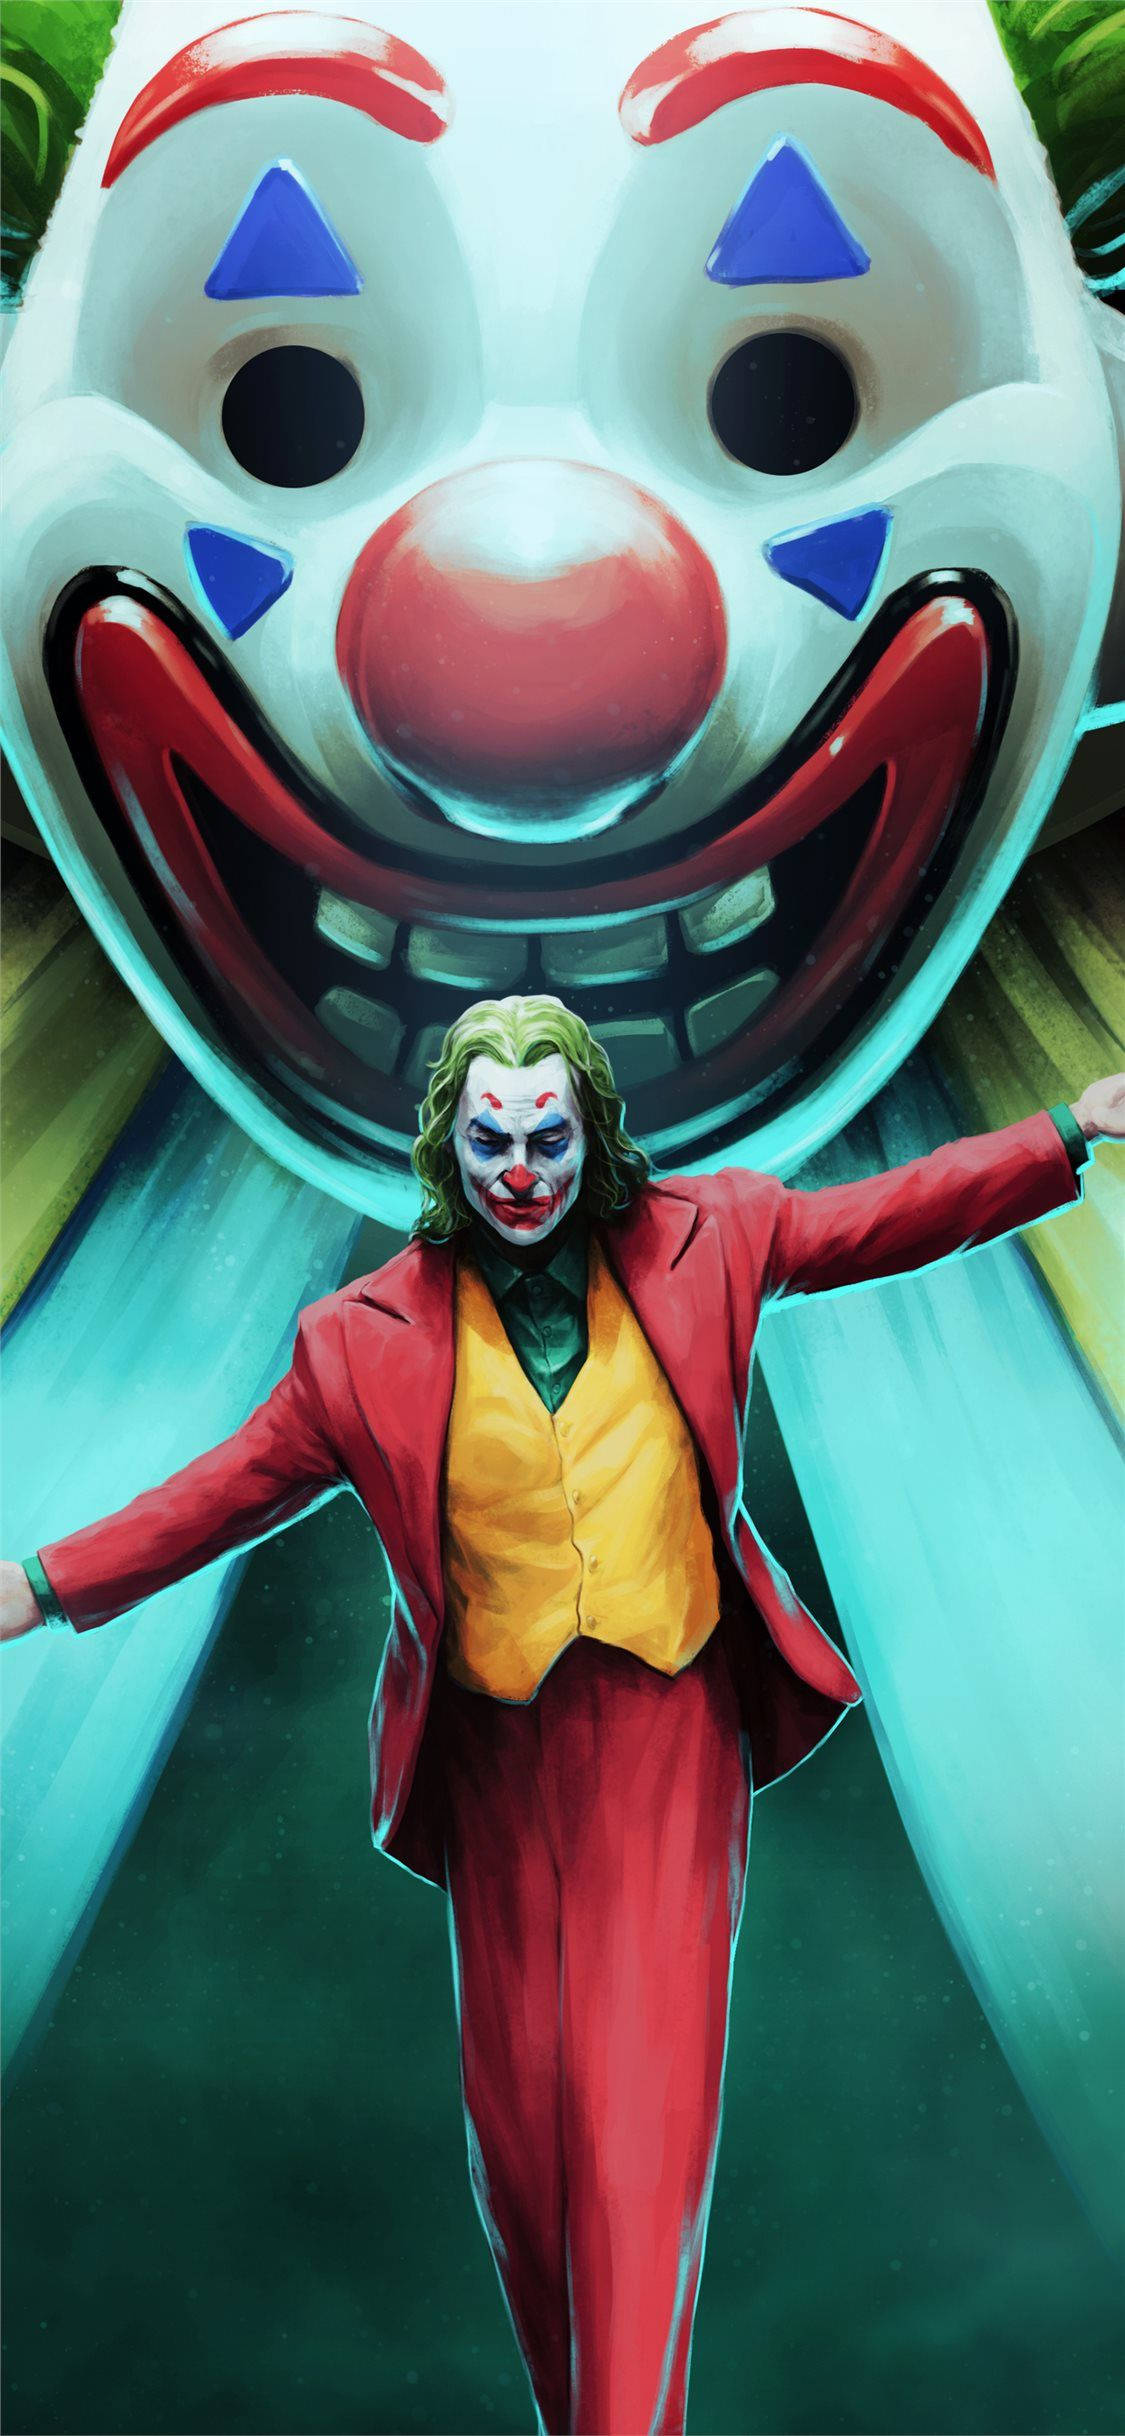 Joker 2019 Movie Art Background